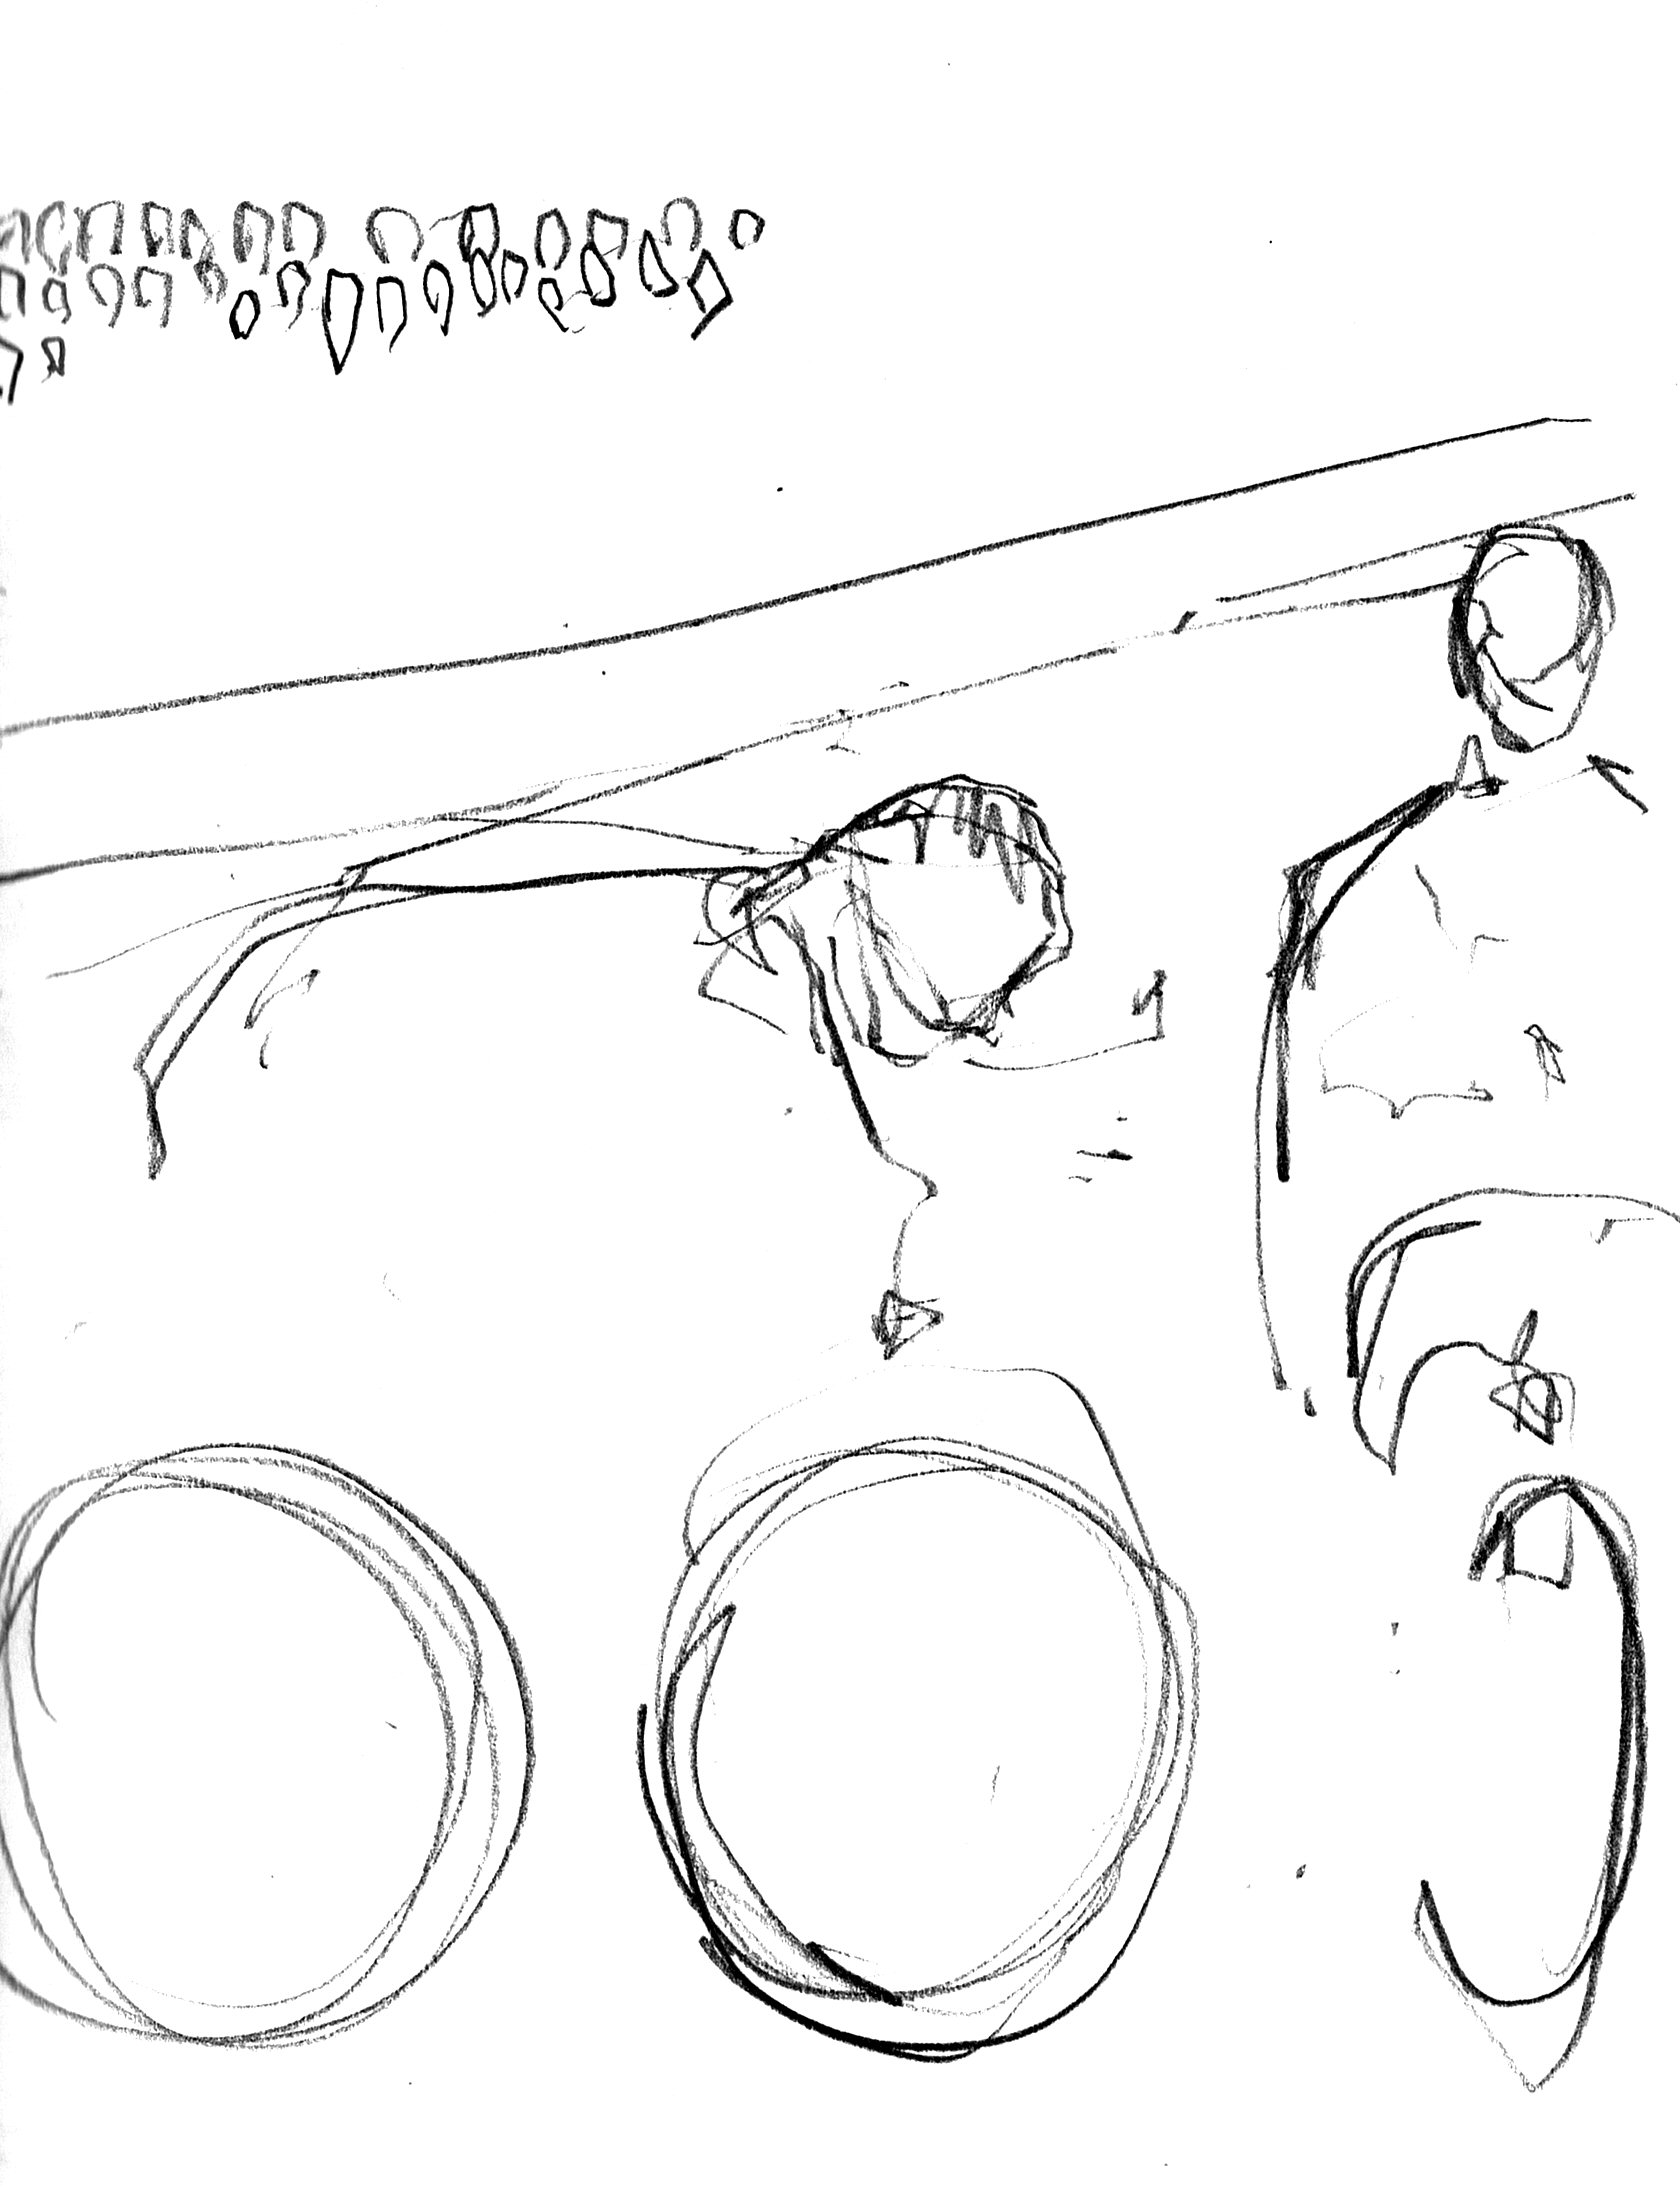 Velodrome Drawing at GetDrawings | Free download